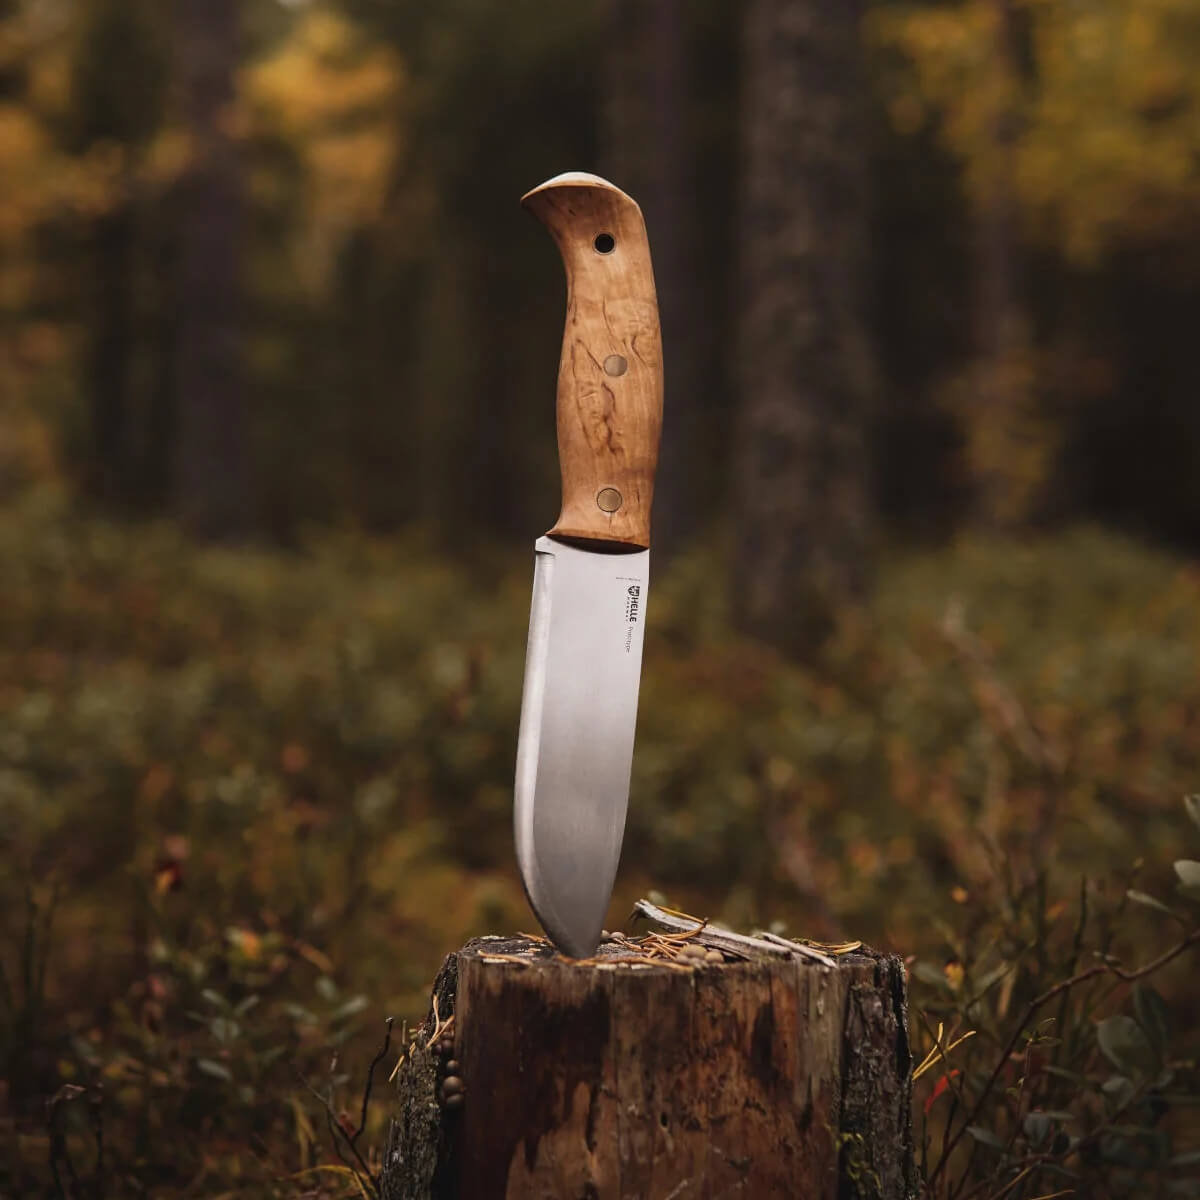 Helle Nord Bushcraft Knife